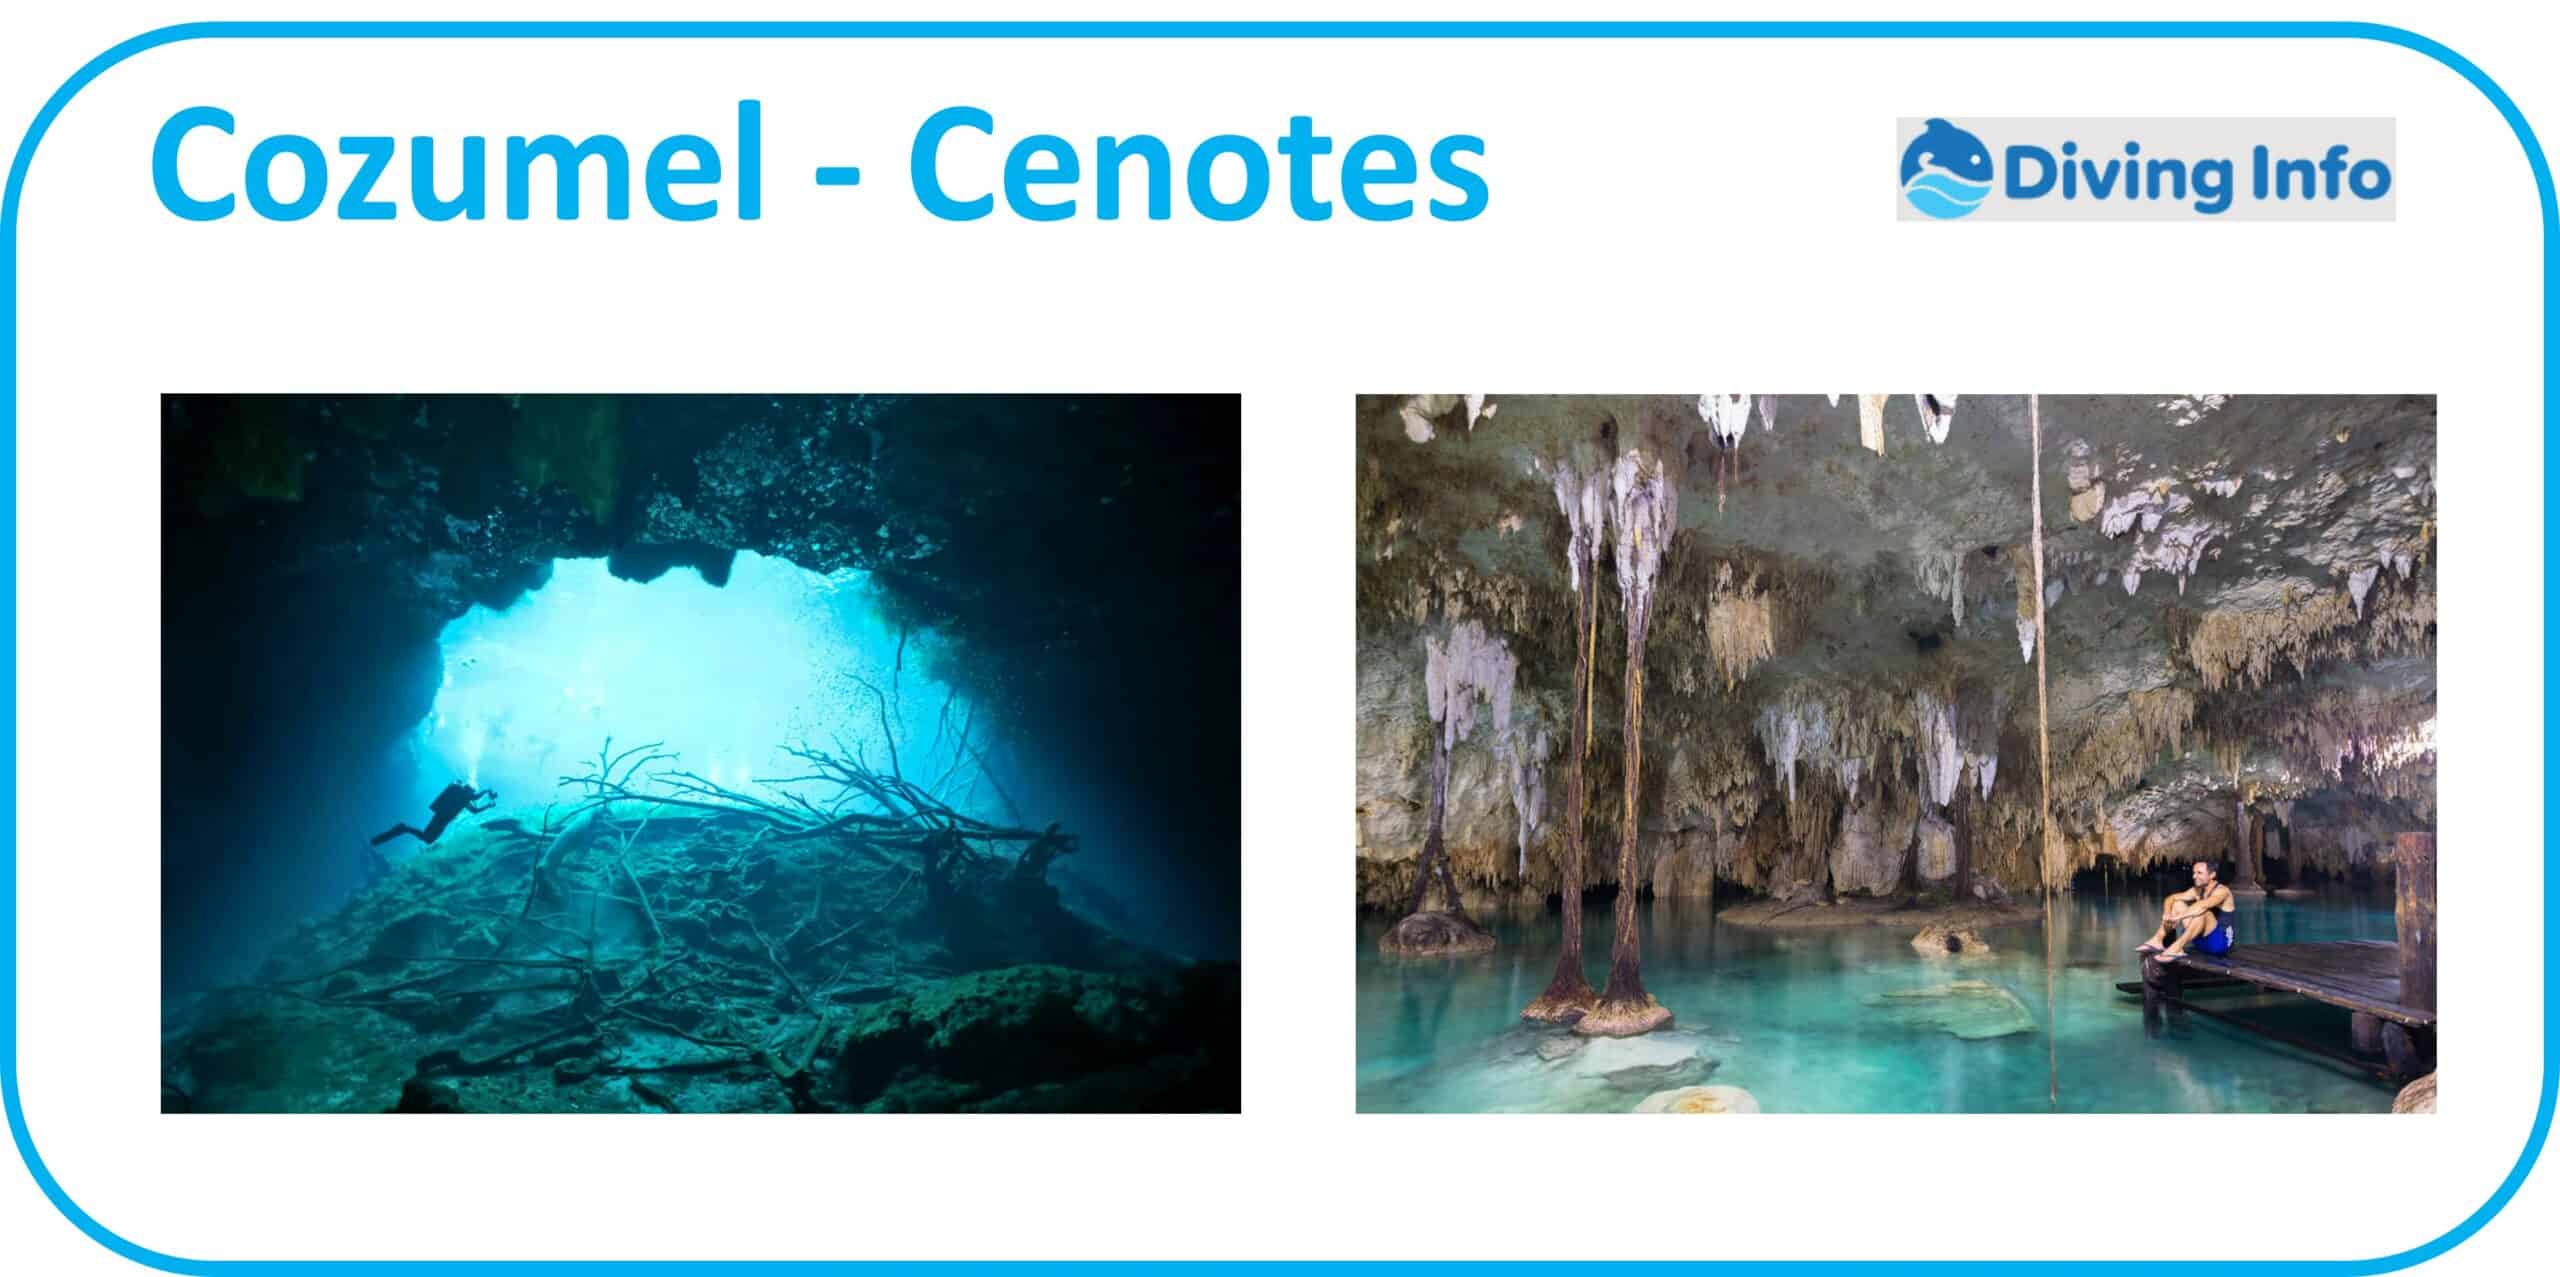 Cozumel - Cenotes